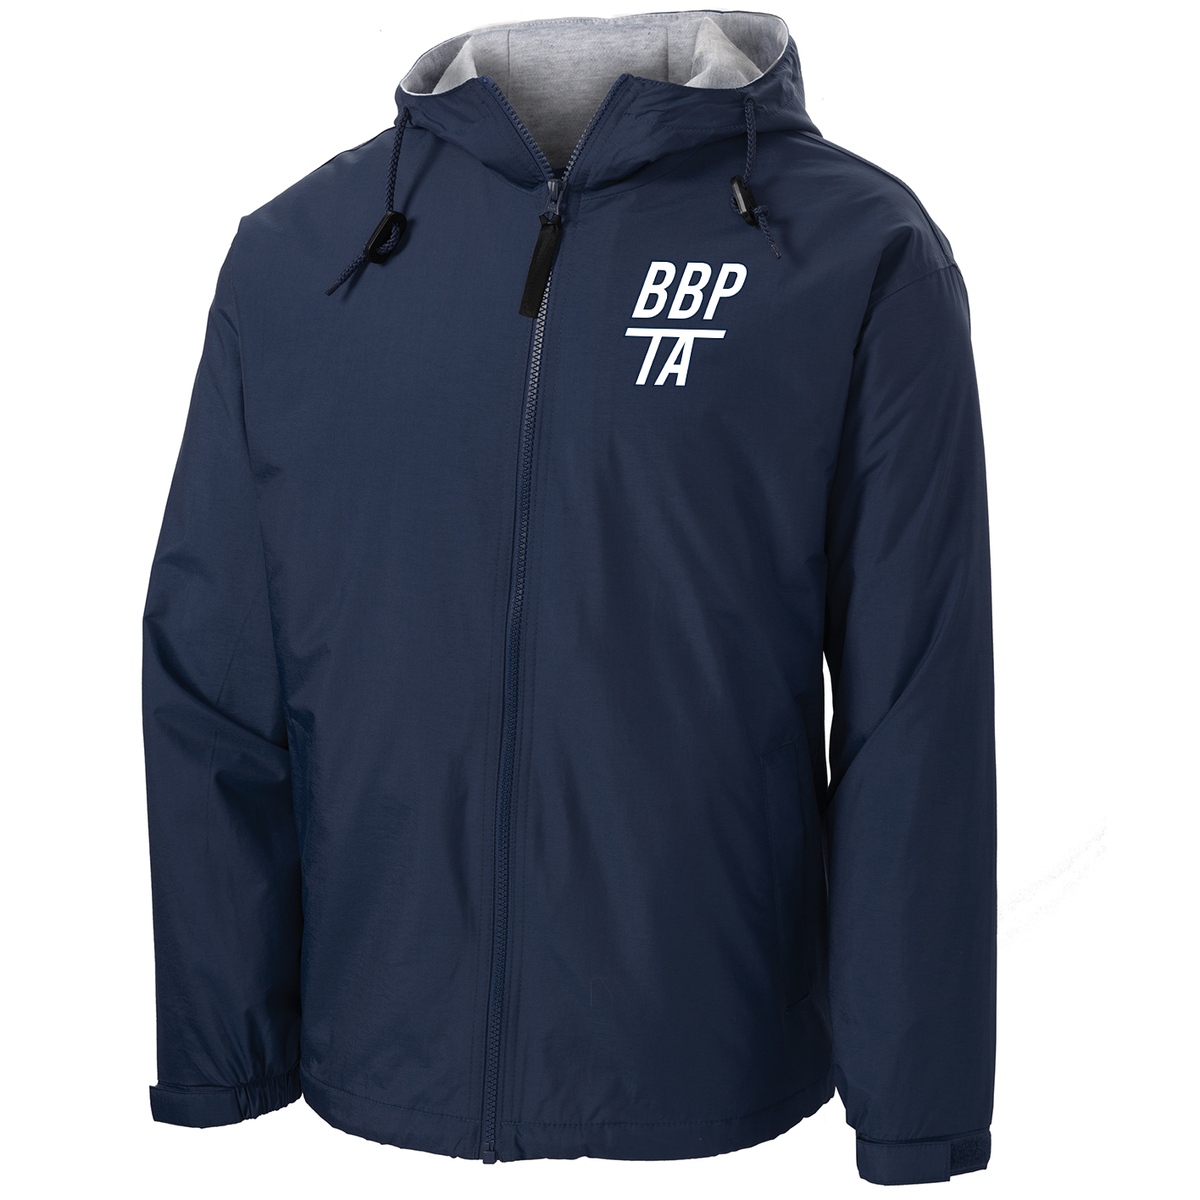 BBP TA Hooded Jacket